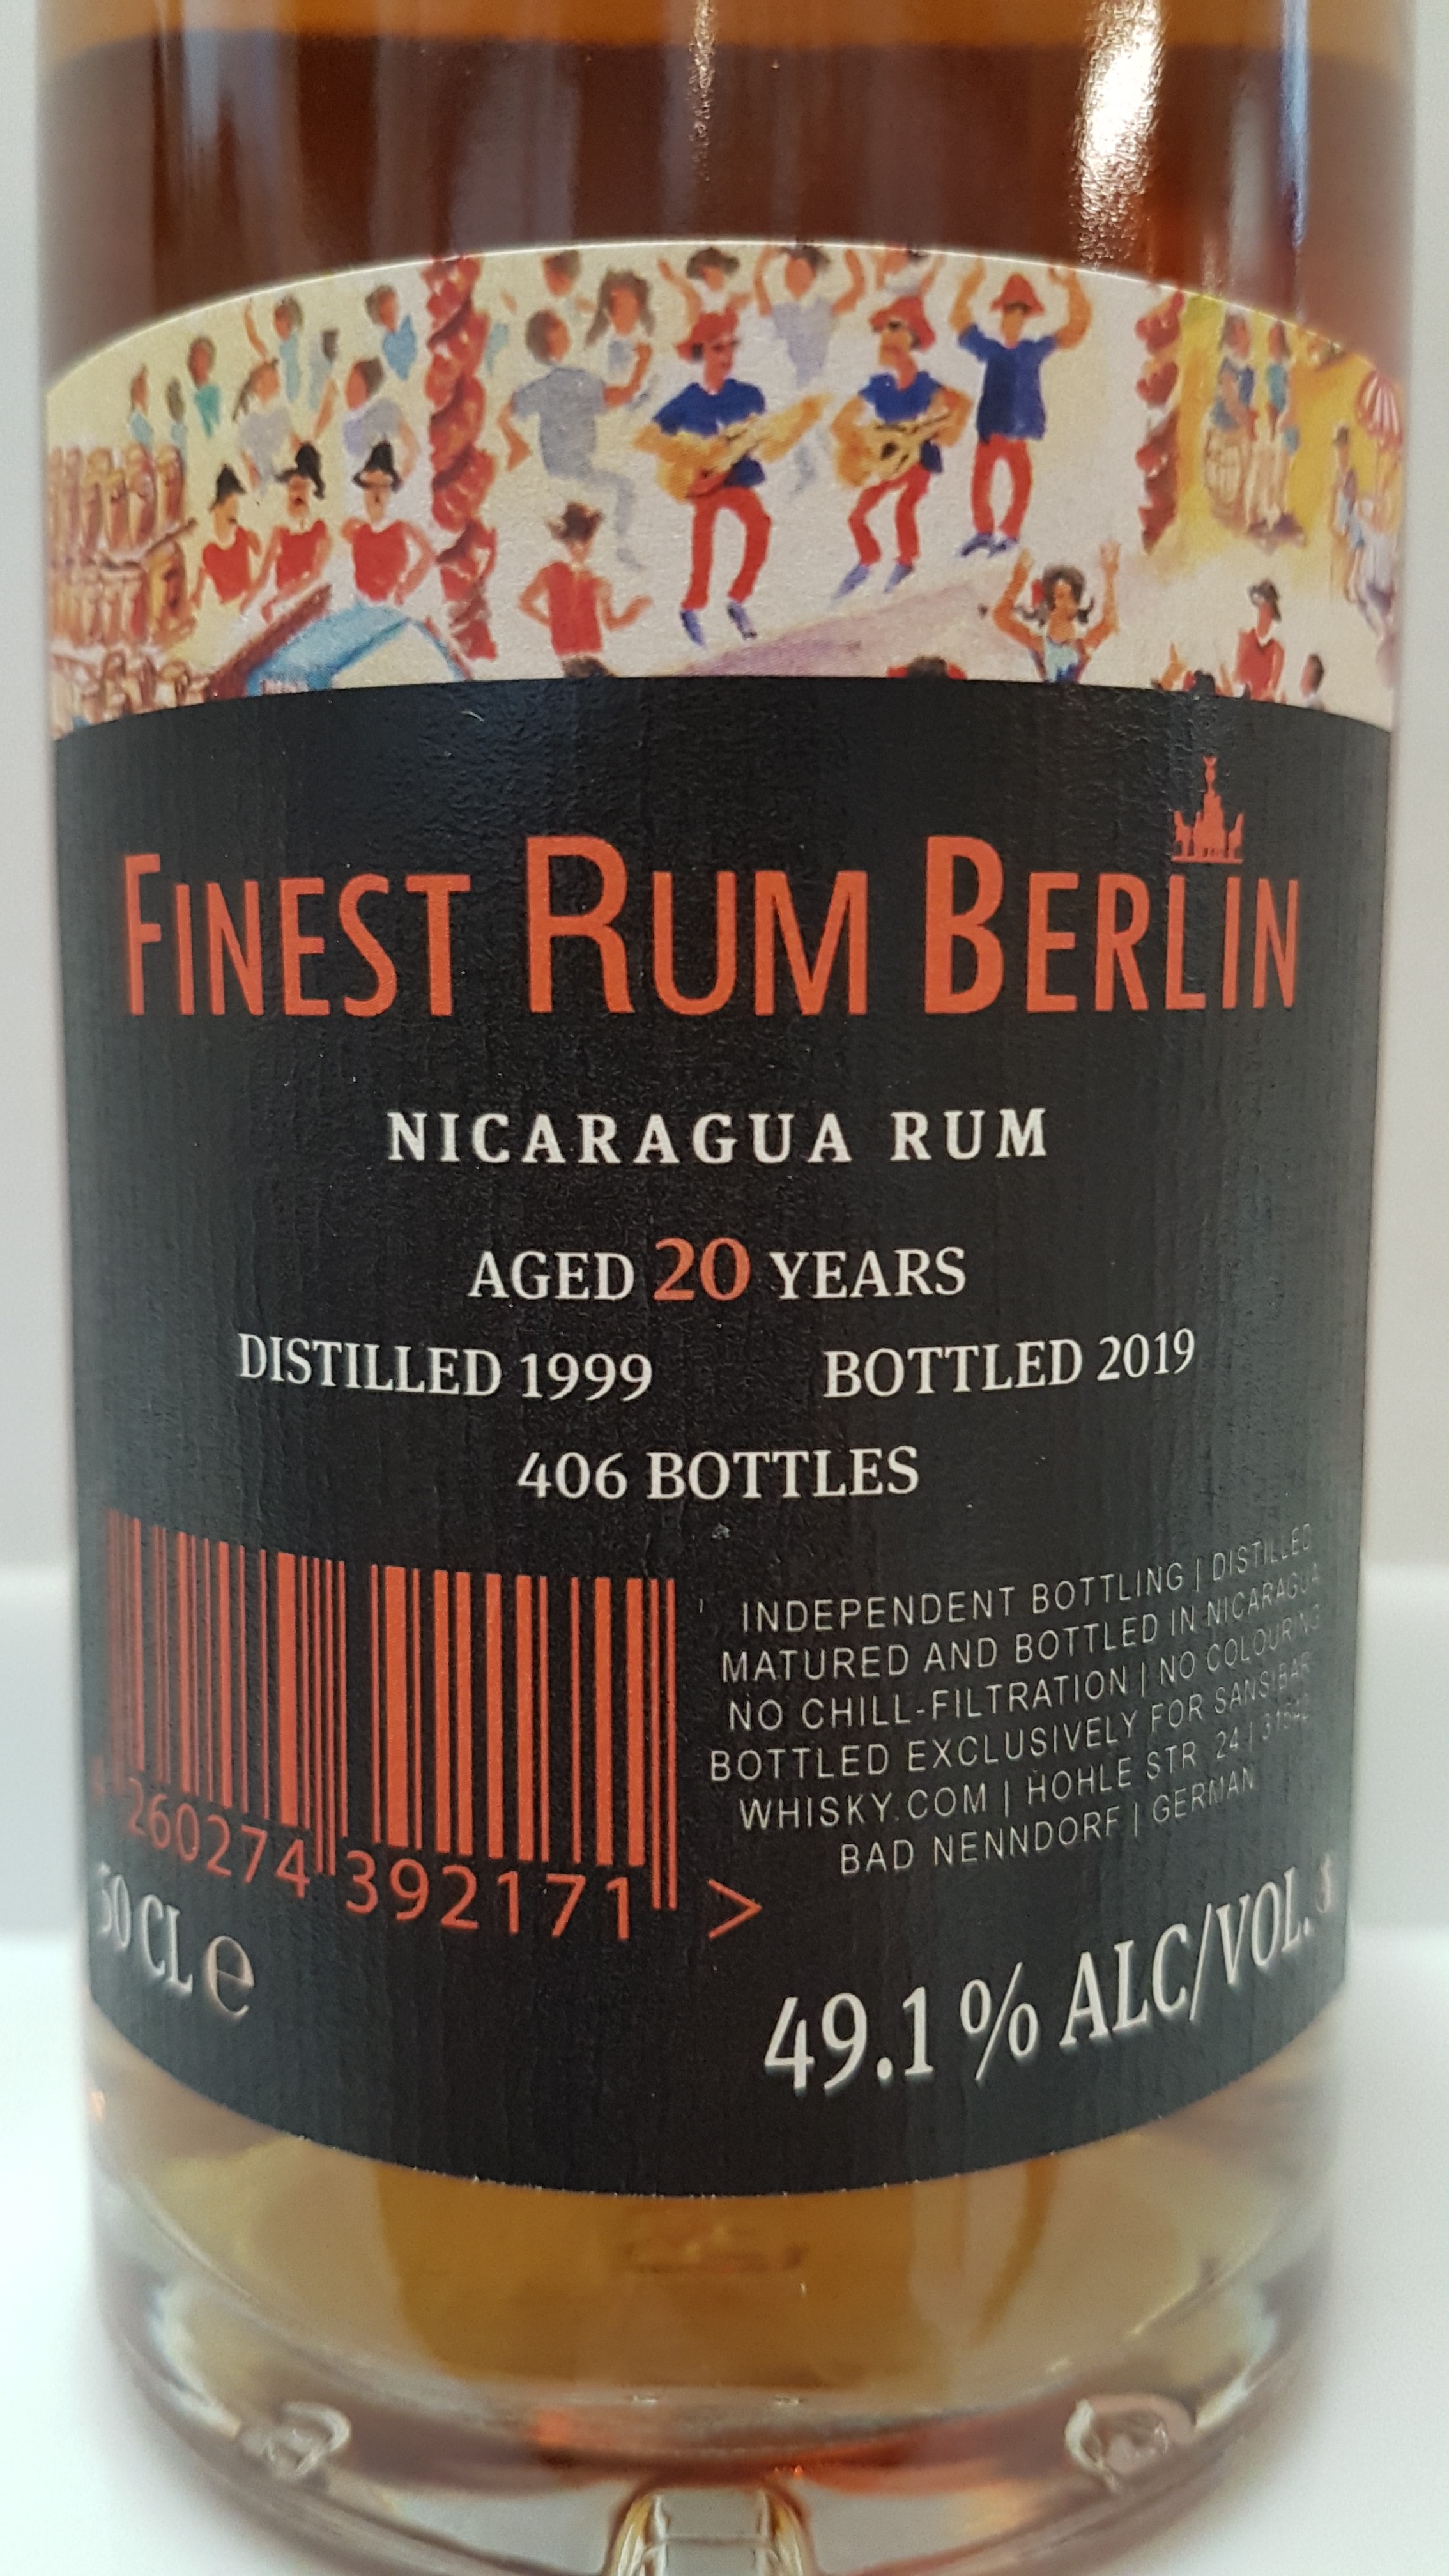 Nicaragua Rum 20y - Finest Rum Berlin